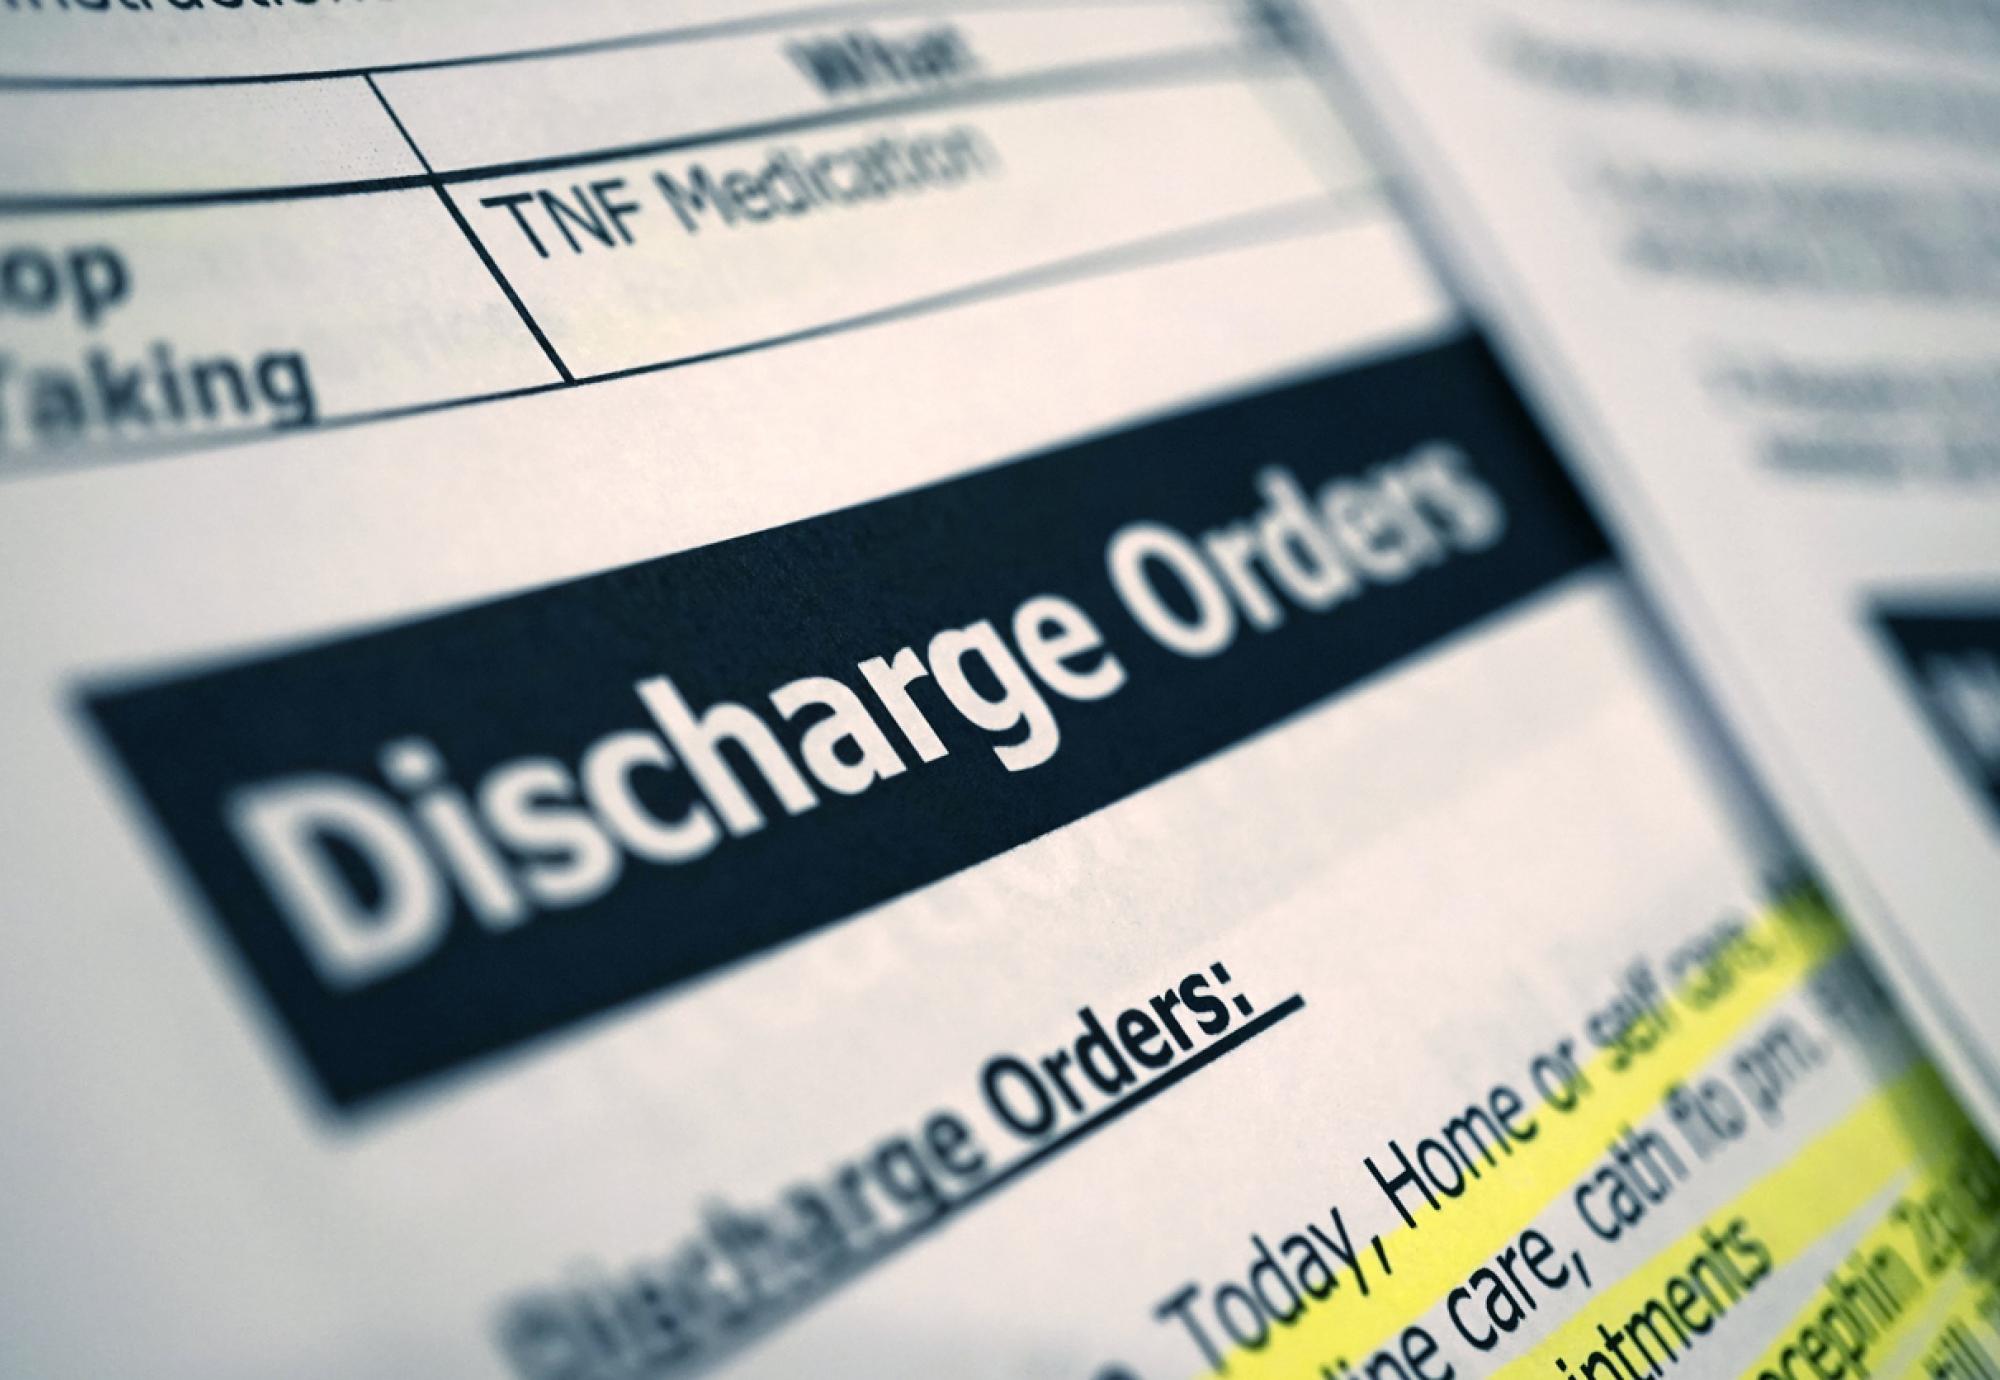 Hospital discharge orders